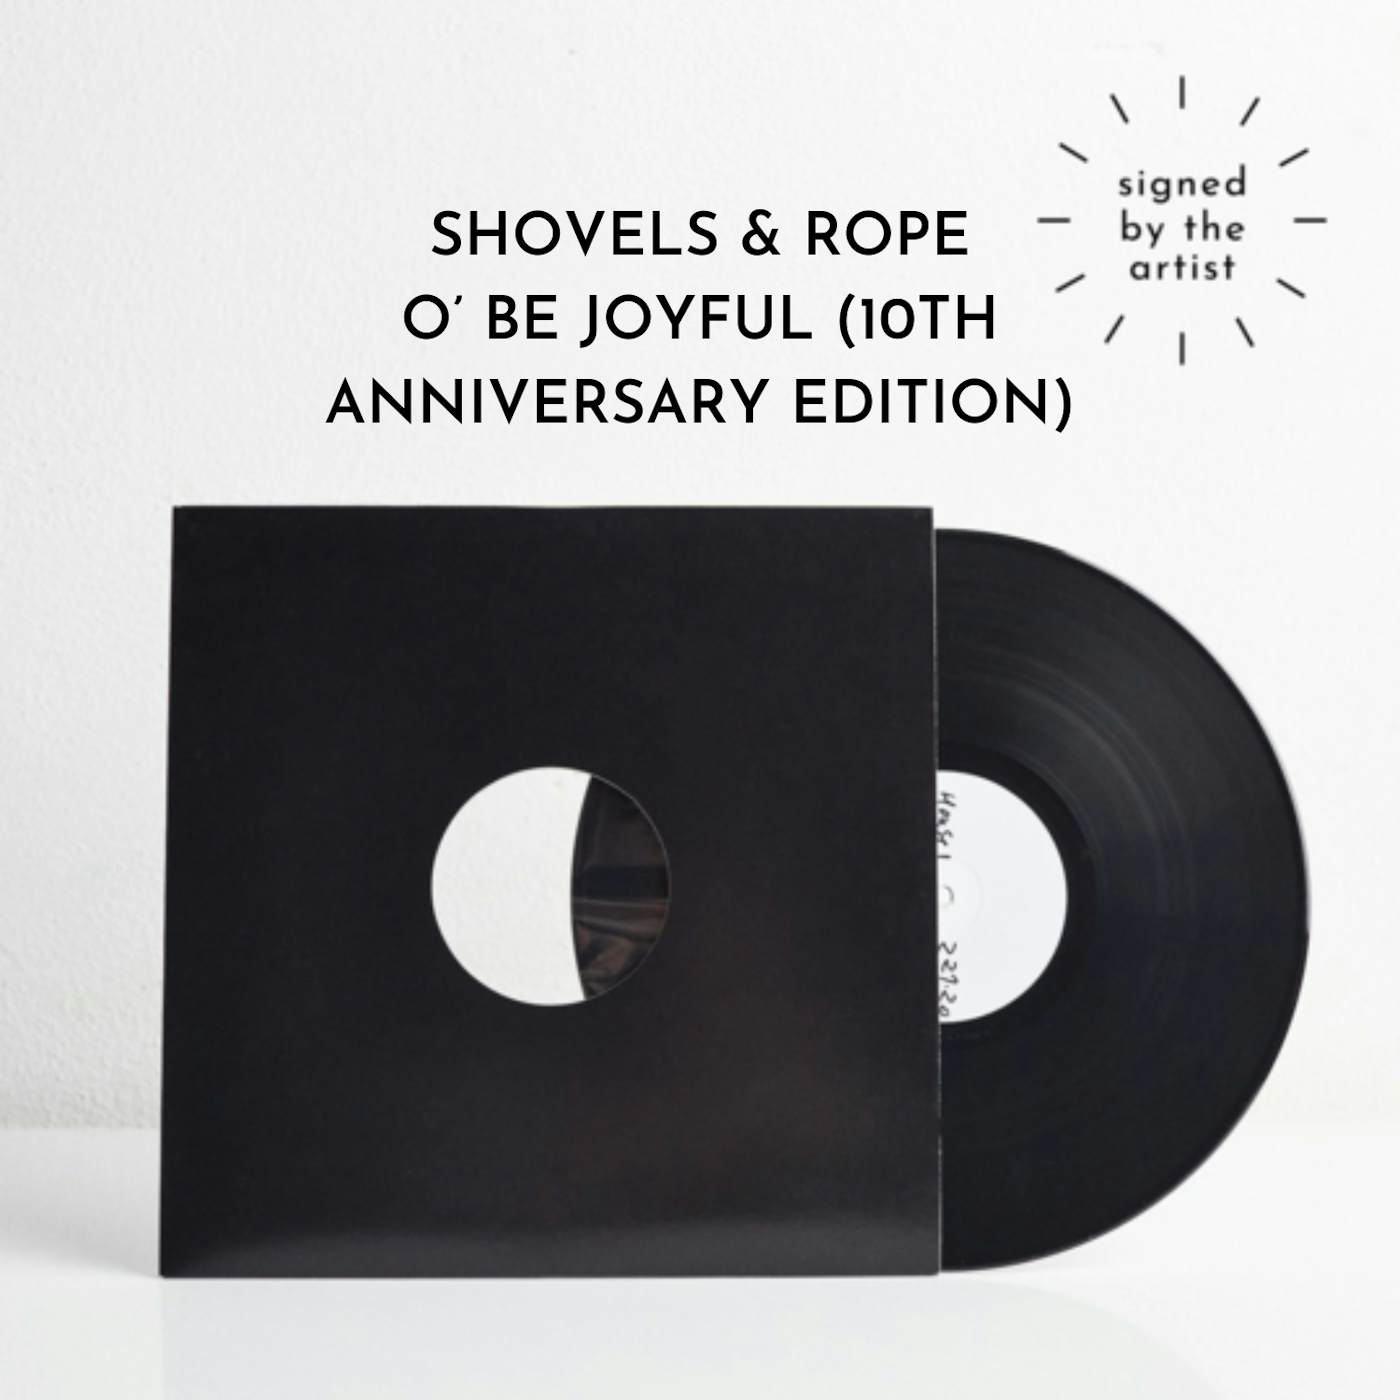 Shovels & Rope O' Be Joyful - 10th Anniversary Edition (SIGNED Vinyl Test Pressing)